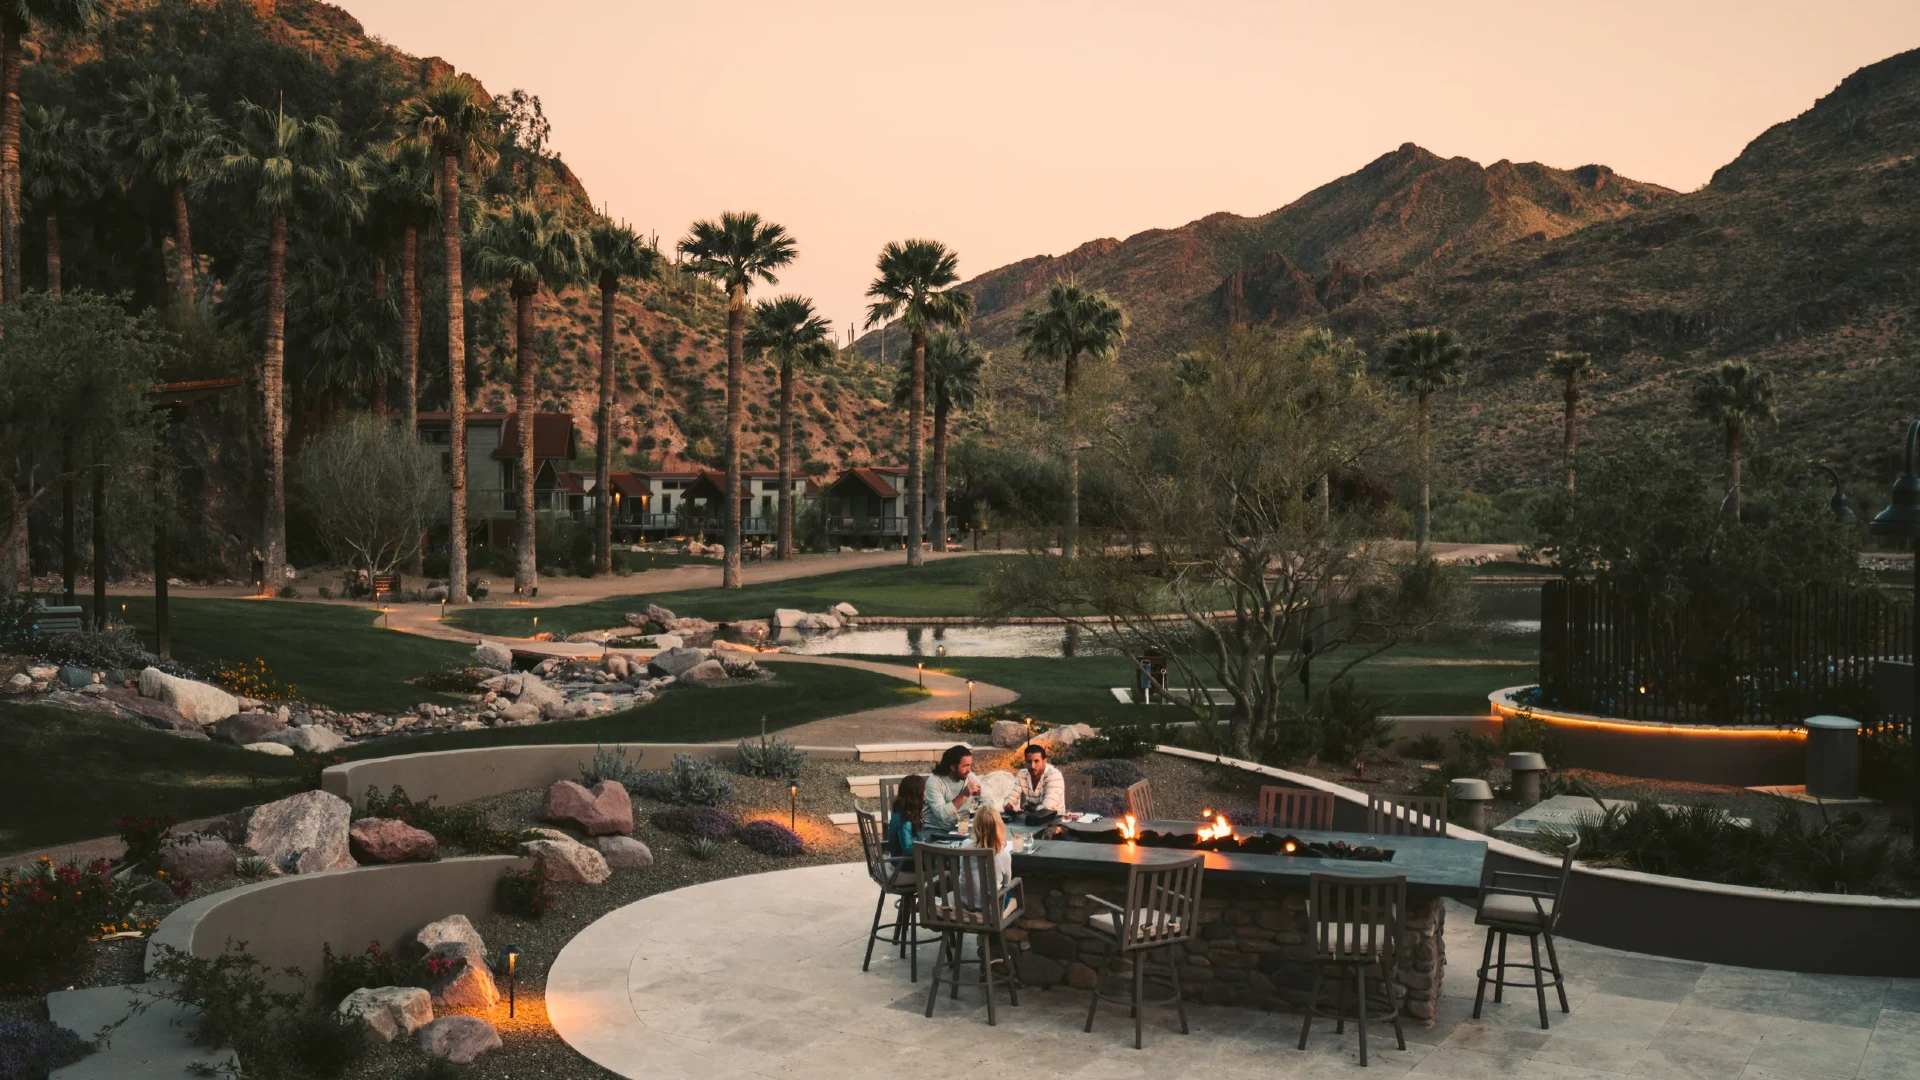 The 11 Best Arizona Resorts to Book 2023: Sedona, Tucson, and More